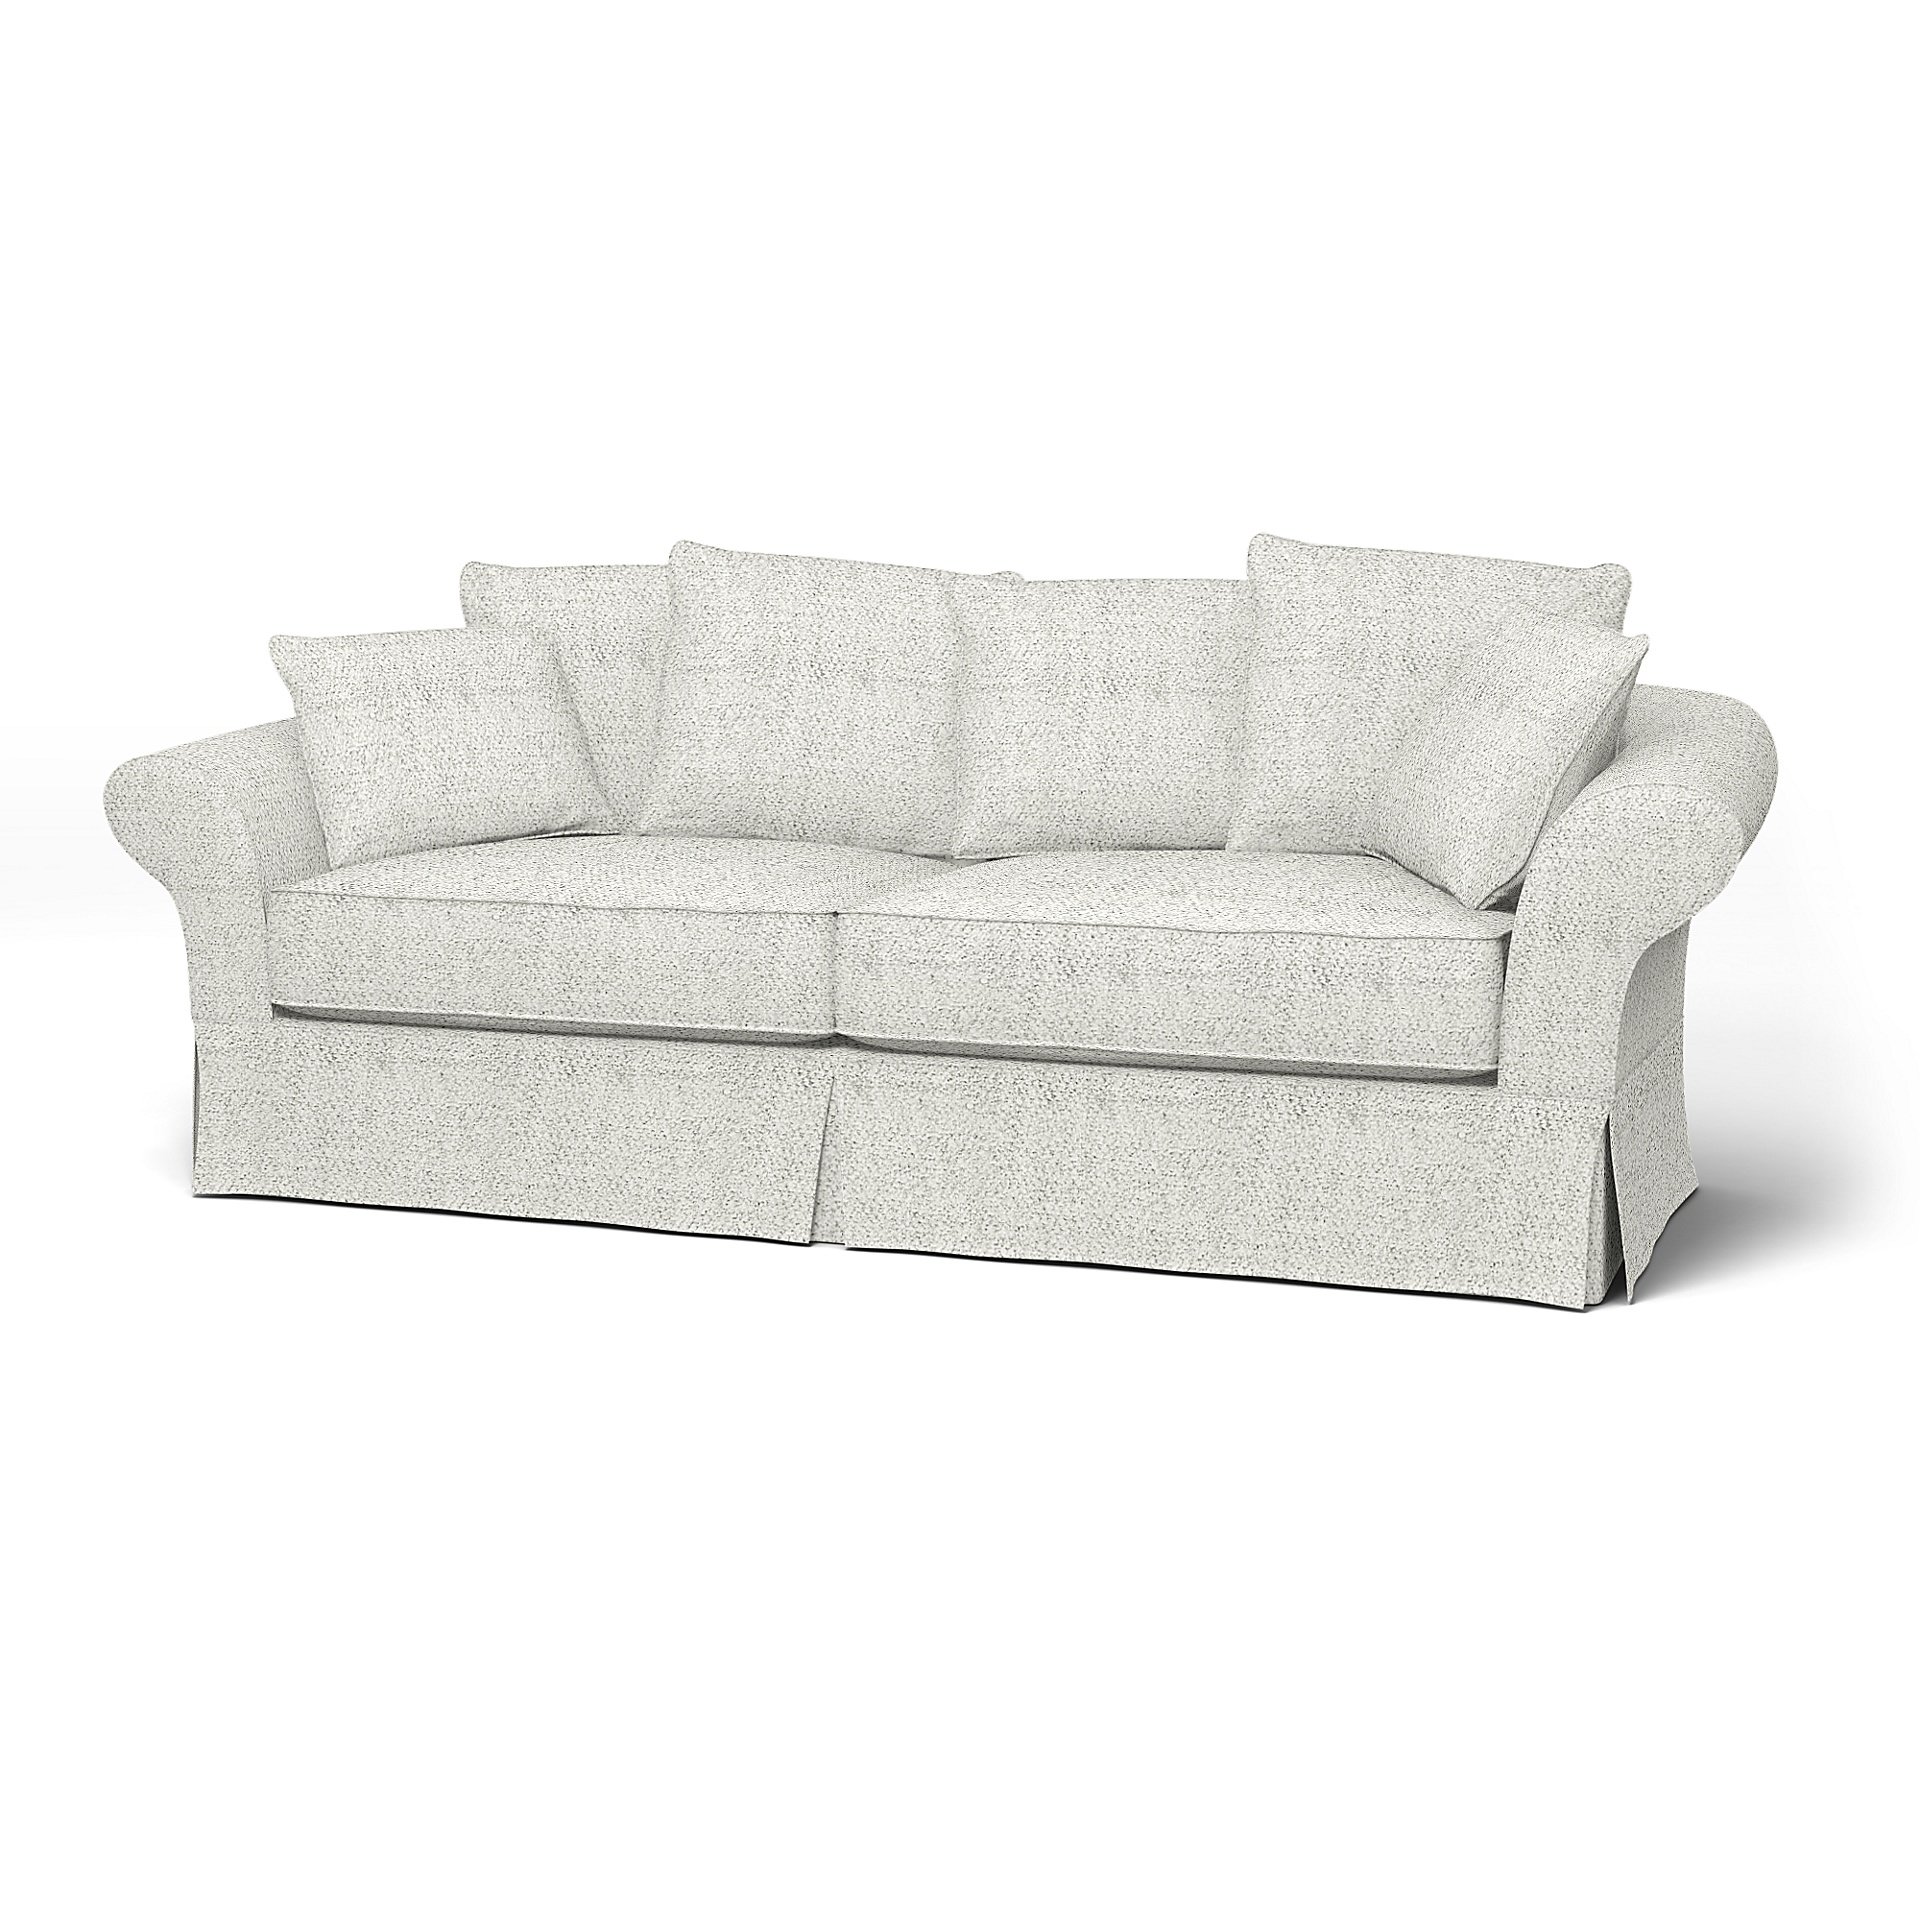 IKEA - Backamo 3 Seater Sofa Cover, Ivory, Boucle & Texture - Bemz